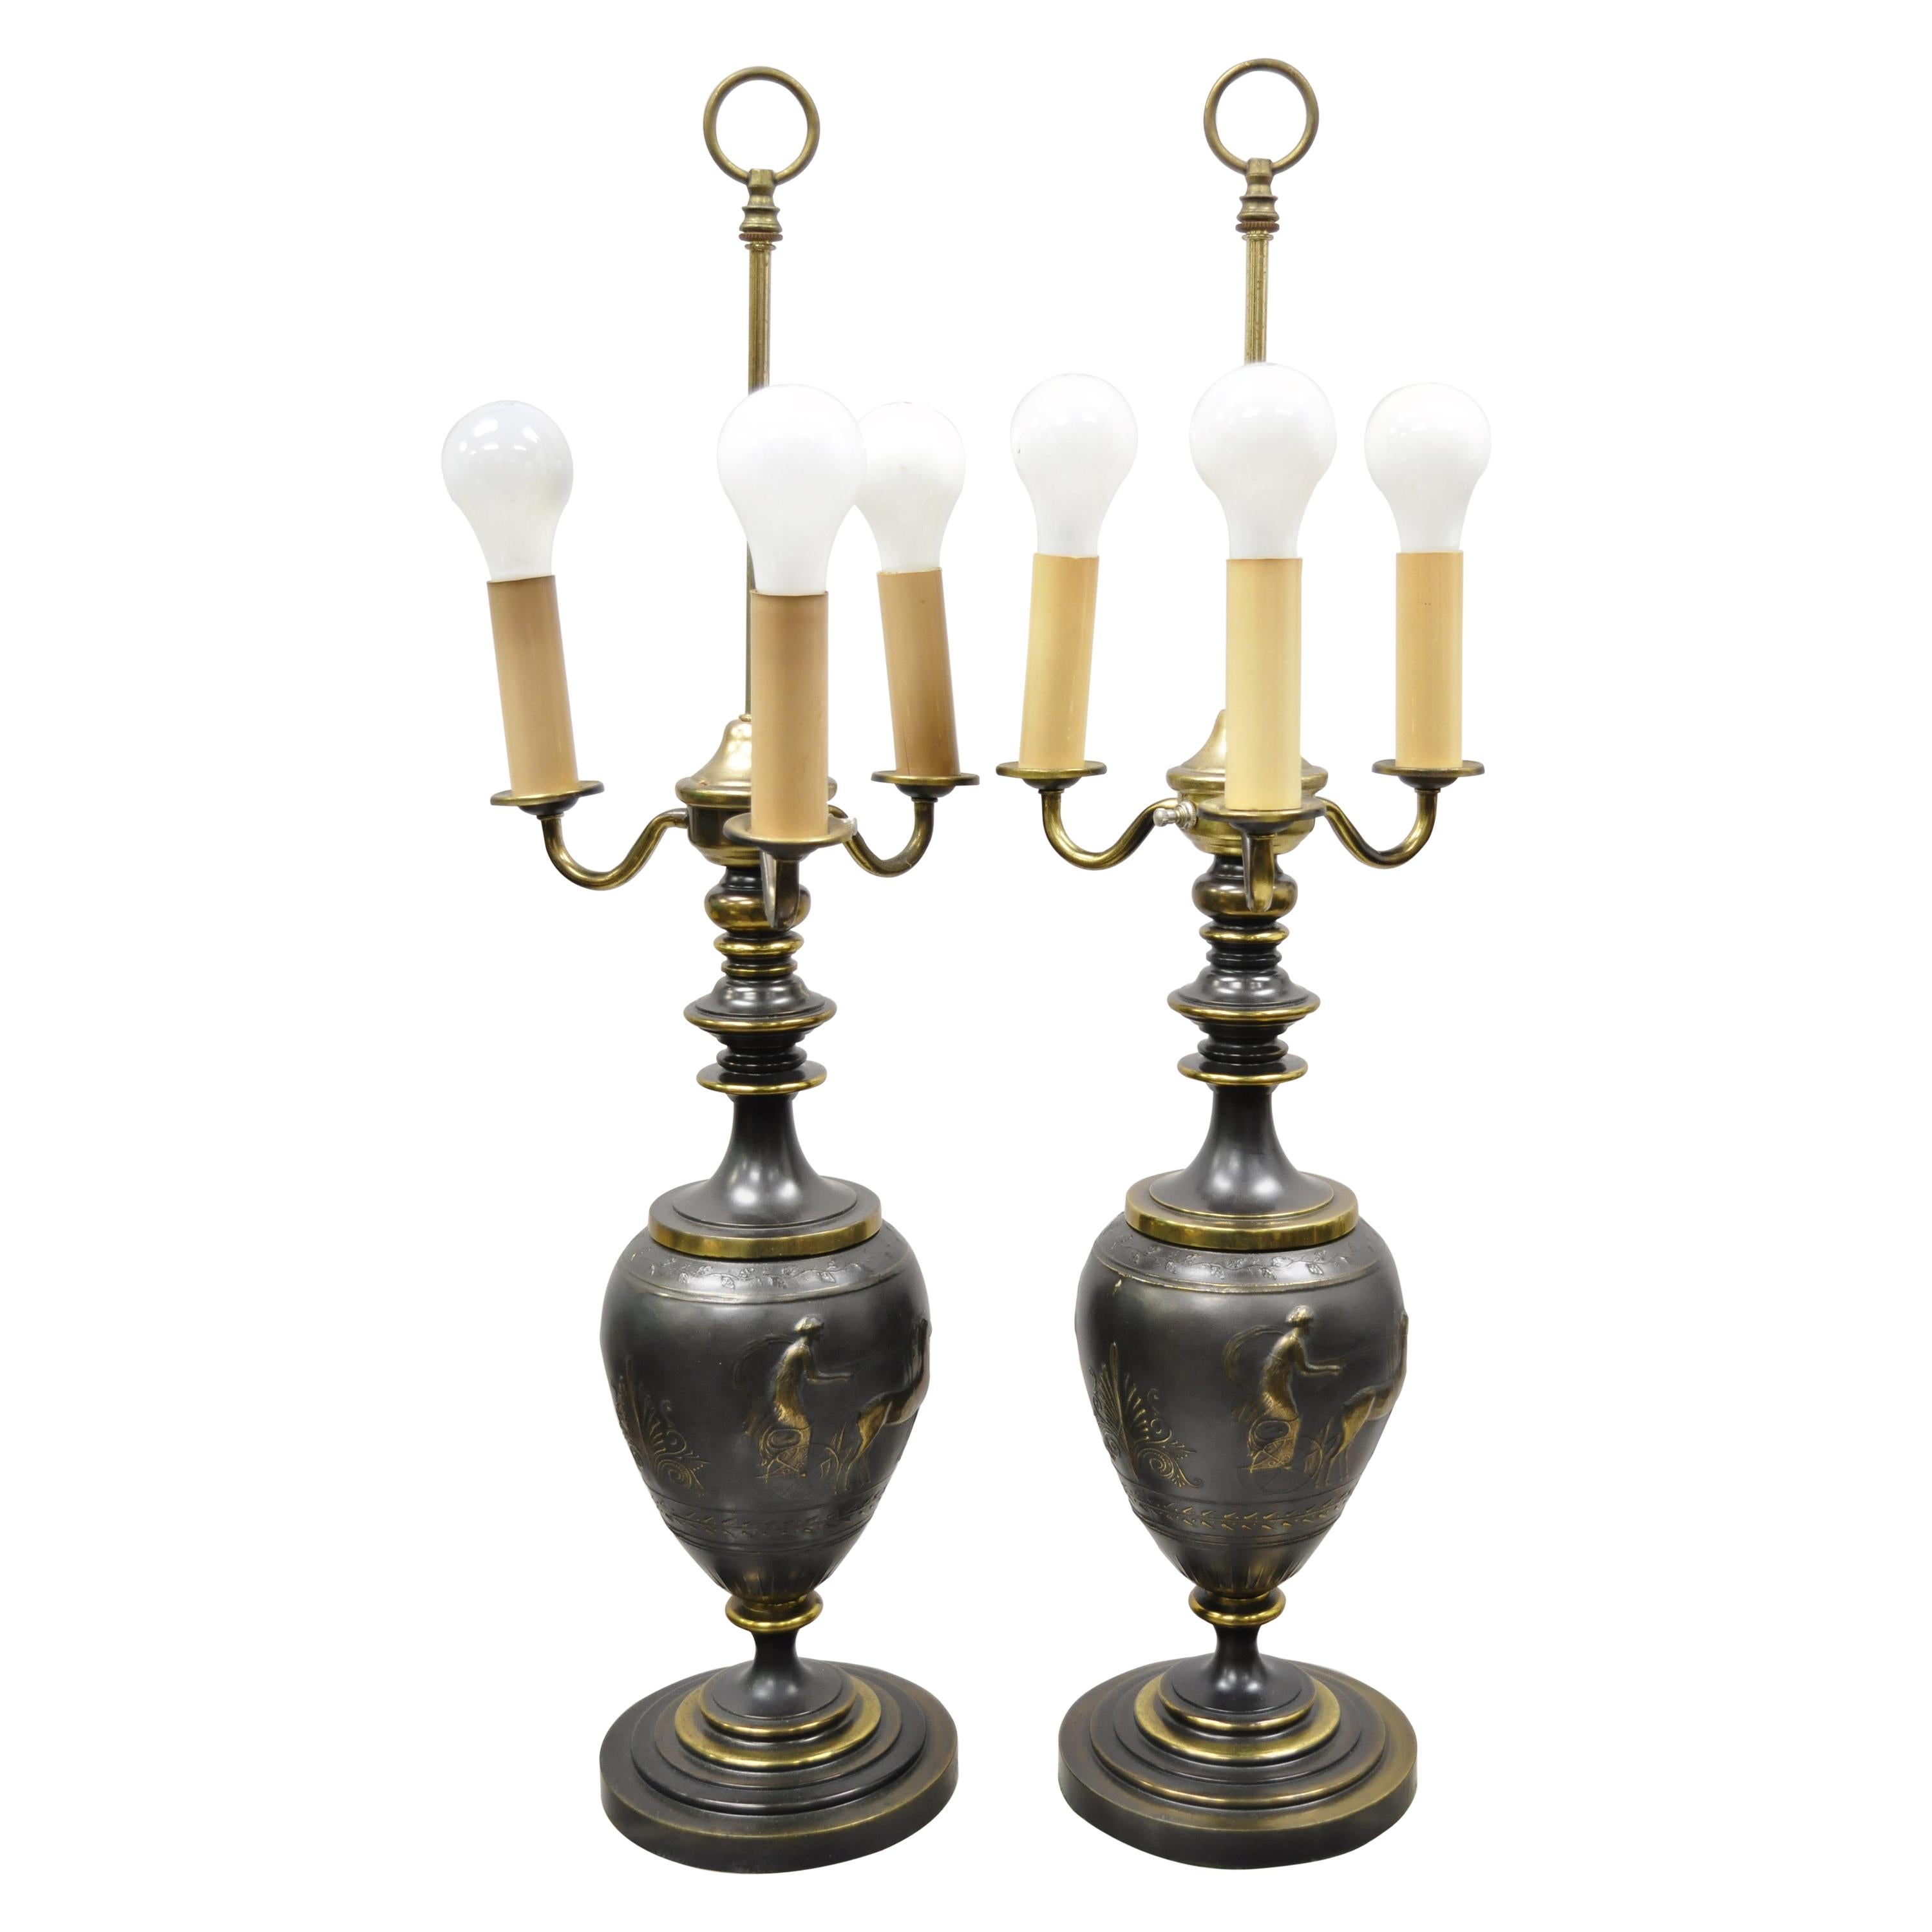 Antike italienische, klassische, bauchige, figurale Tischlampen aus Metall in Bronze-Finish, Paar